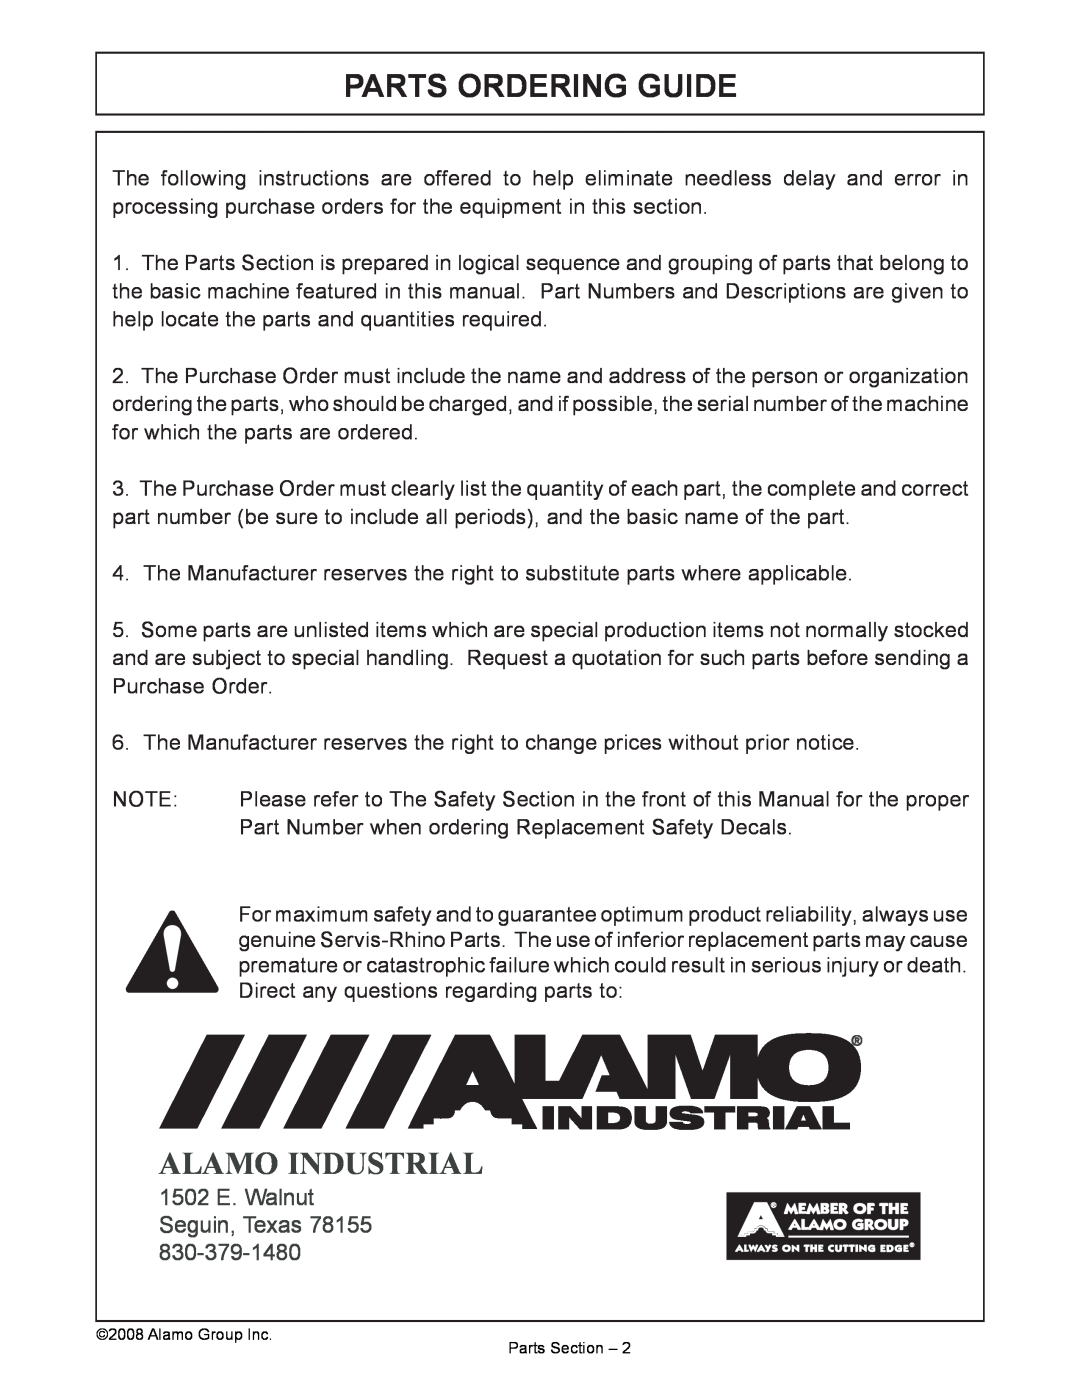 Alamo 02969111P manual Parts Ordering Guide, 1502 E. Walnut Seguin, Texas 78155, Alamo Industrial 